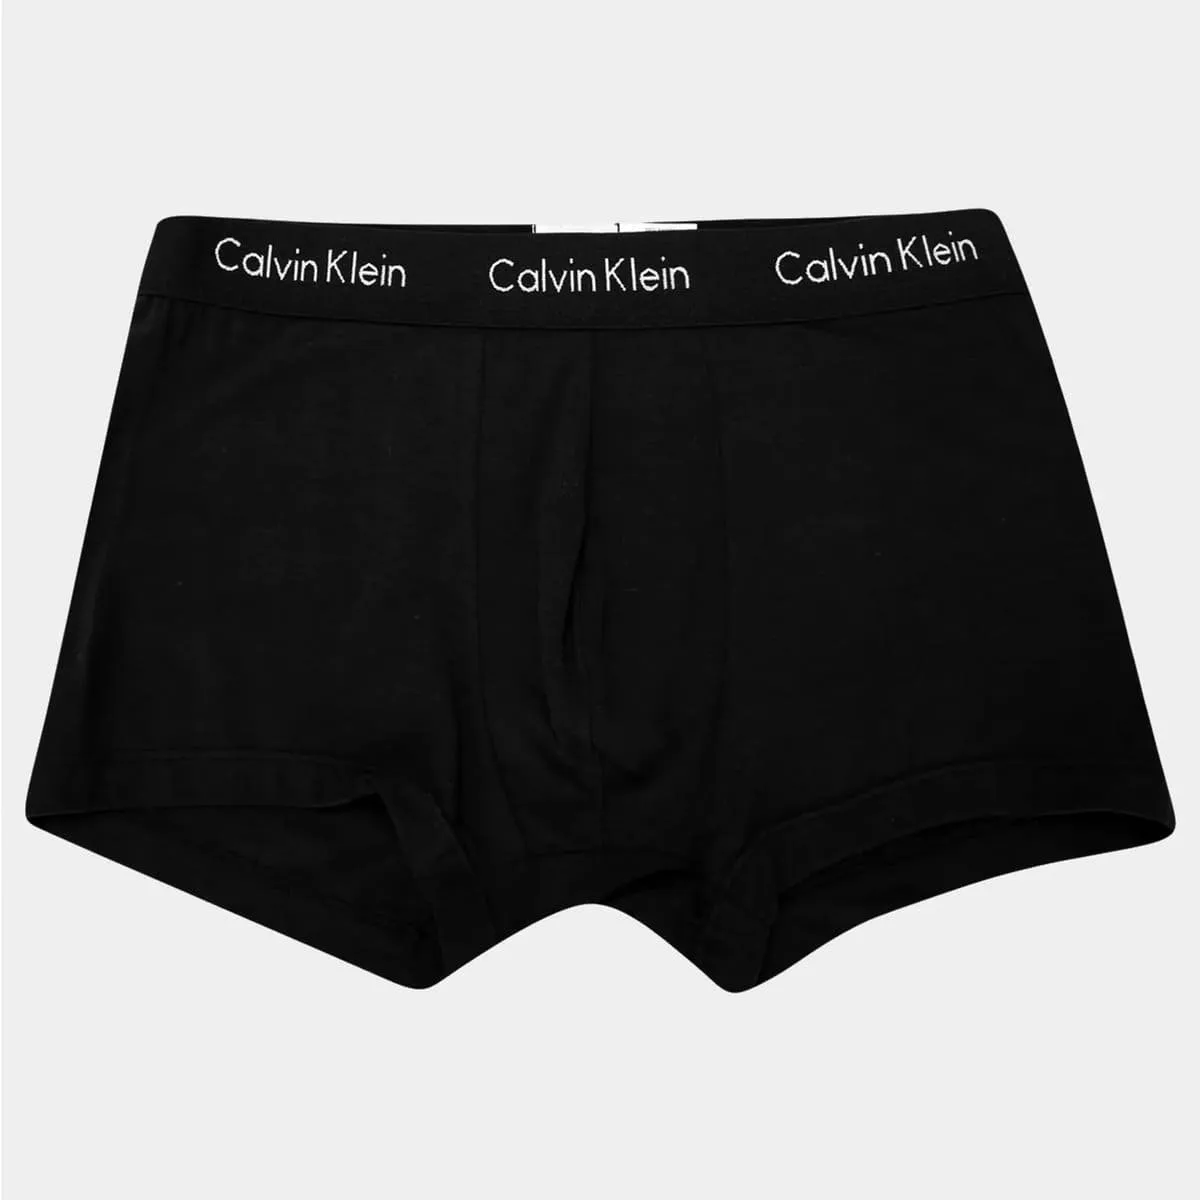 Cueca Trunk Calvin Klein Confort Modal II Preta